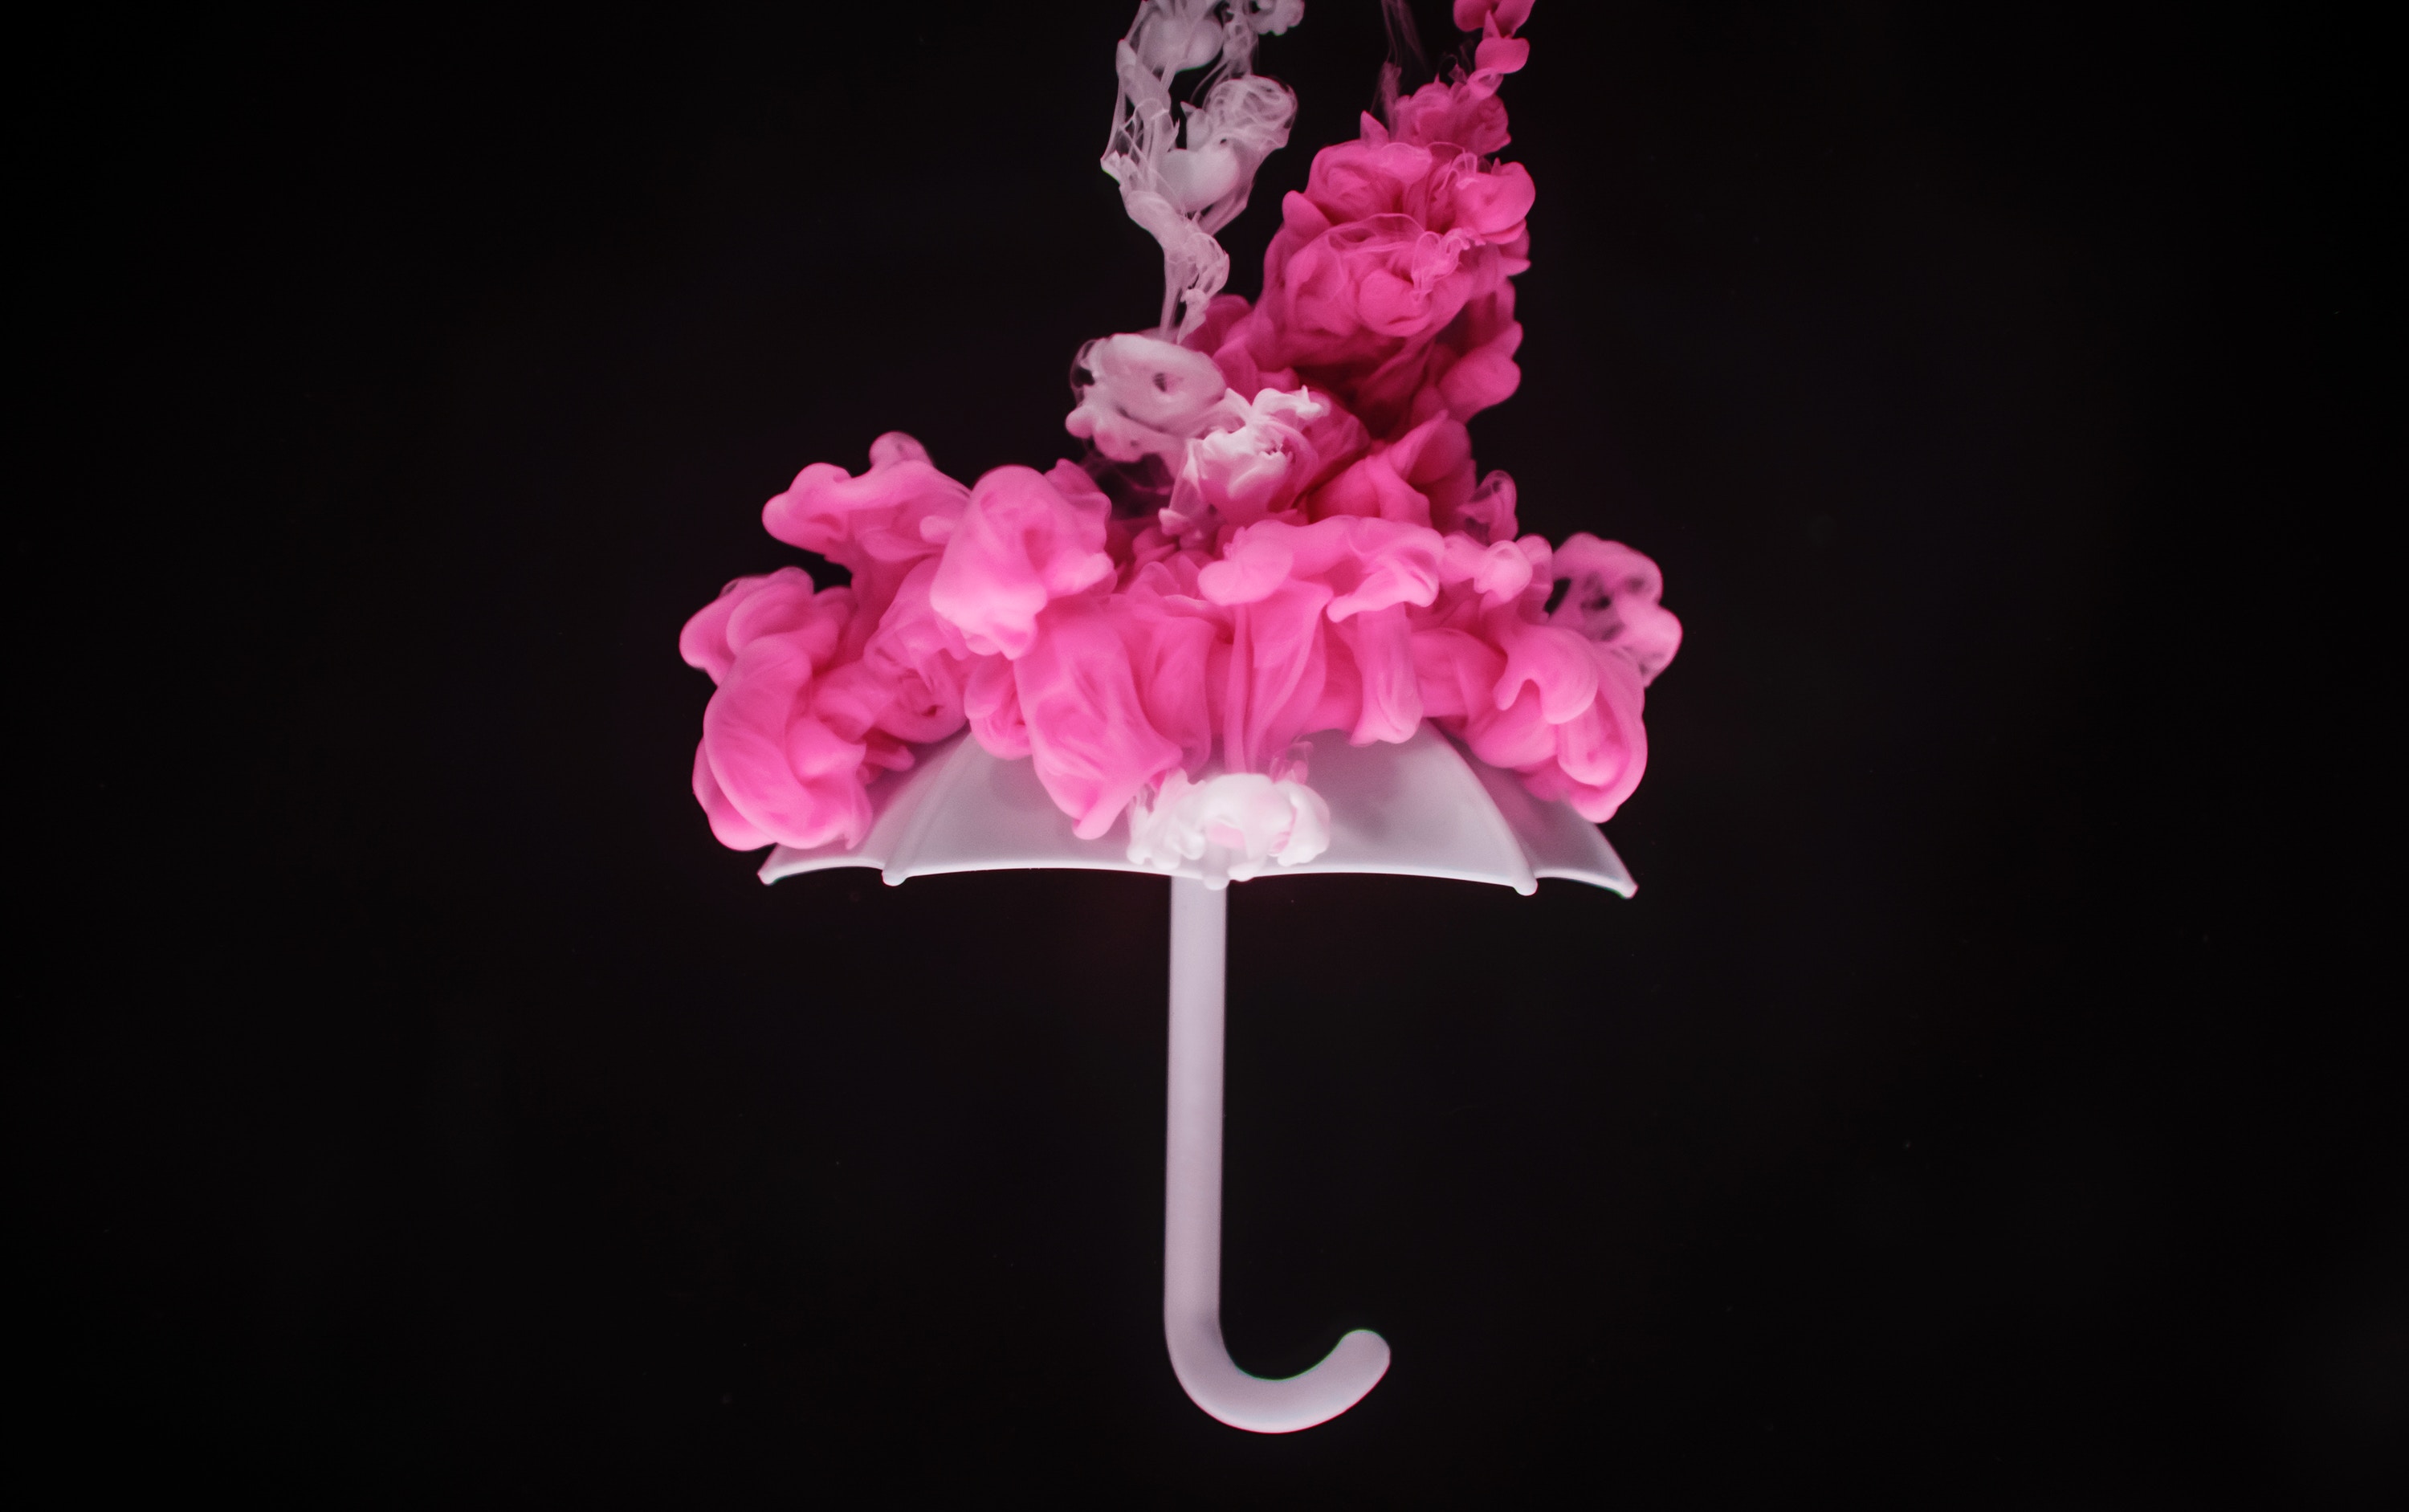 Umbrella with pink smoke on top